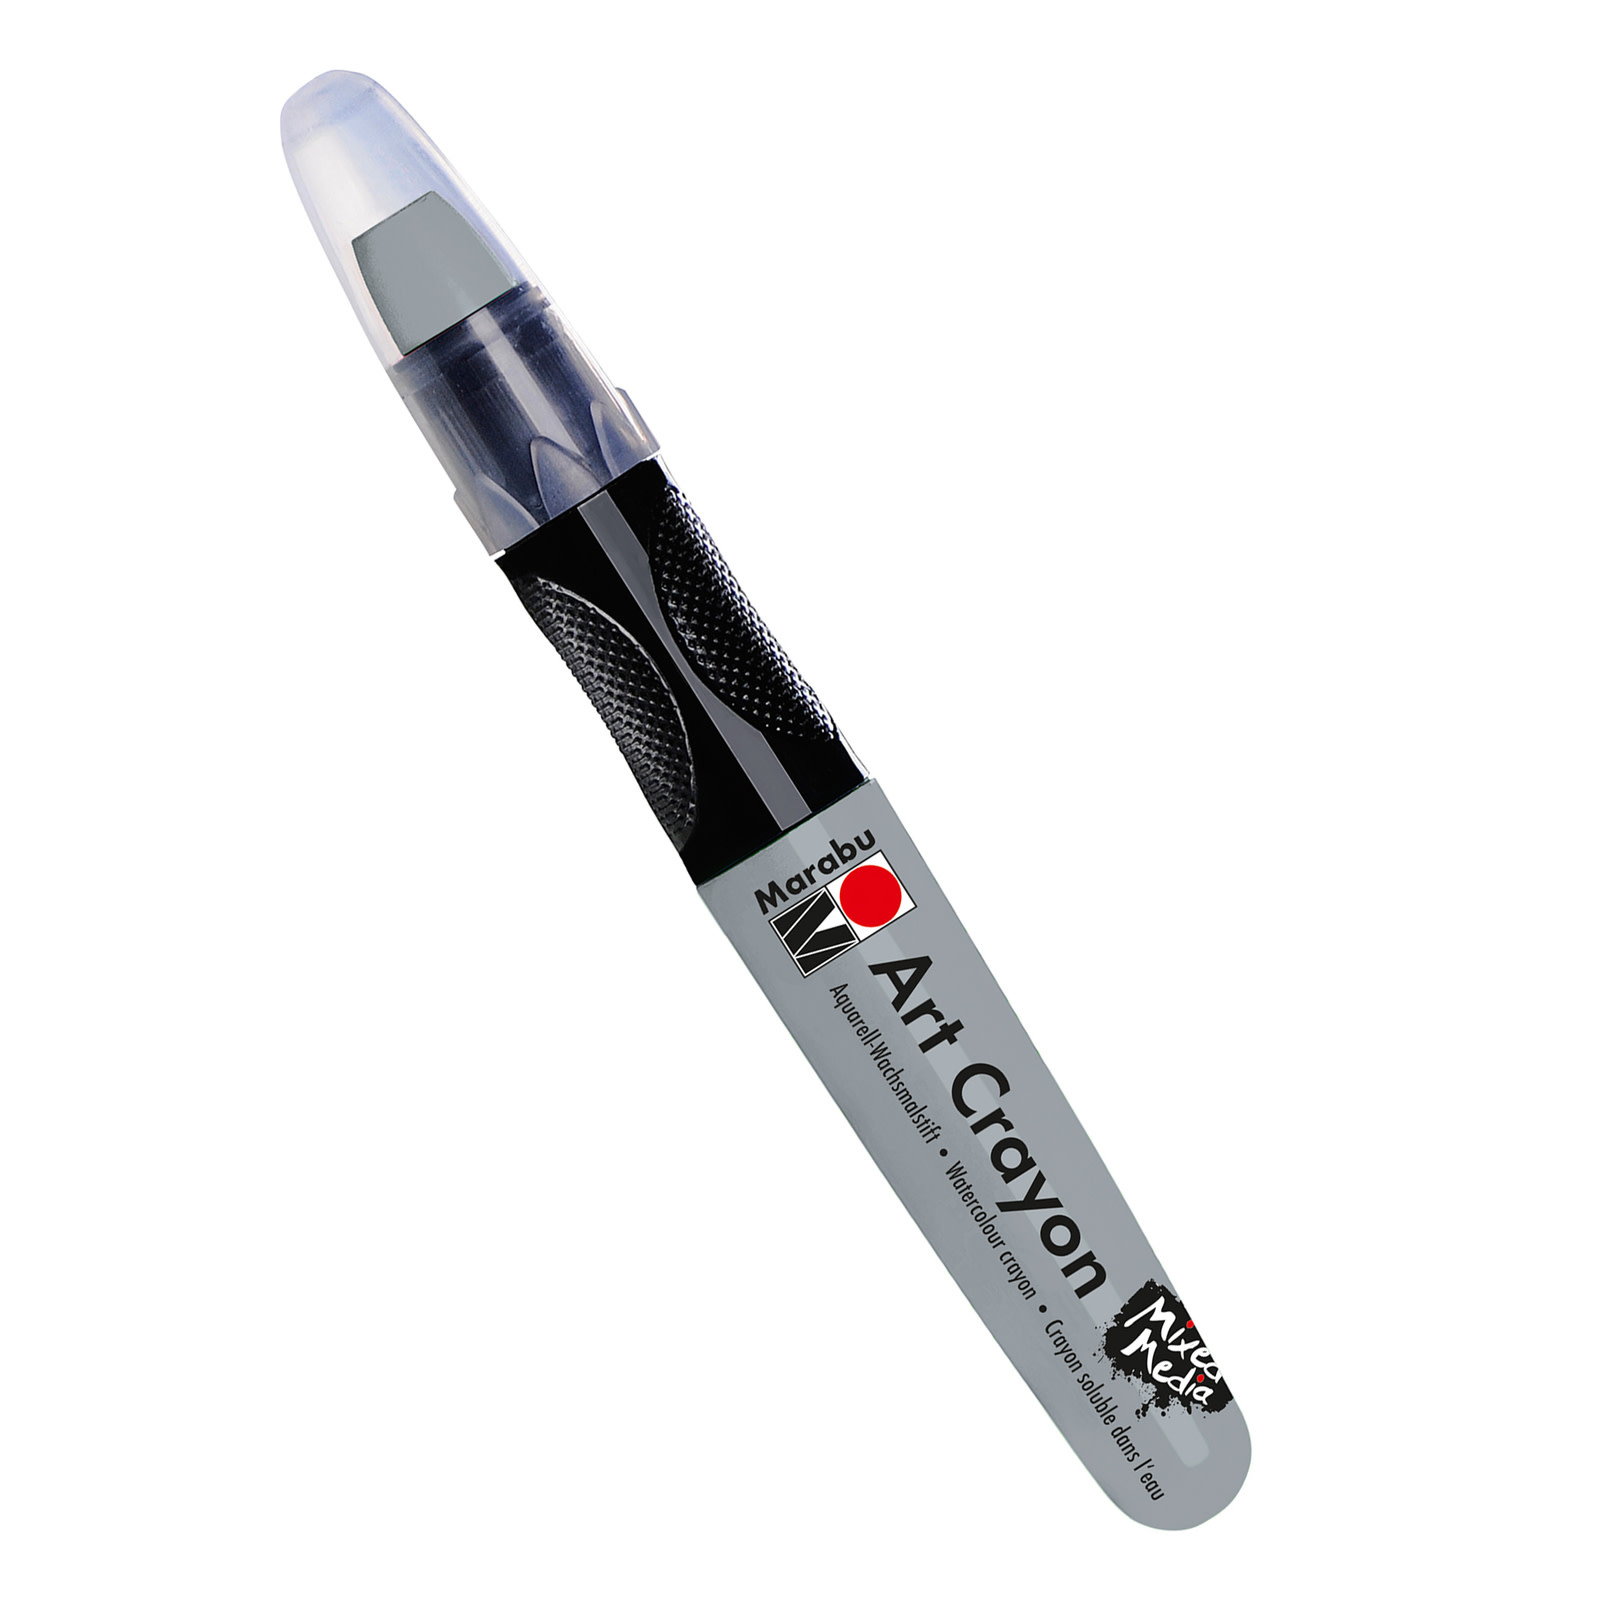 Marabu Art Crayons, Light Gray - Water Soluble Wax